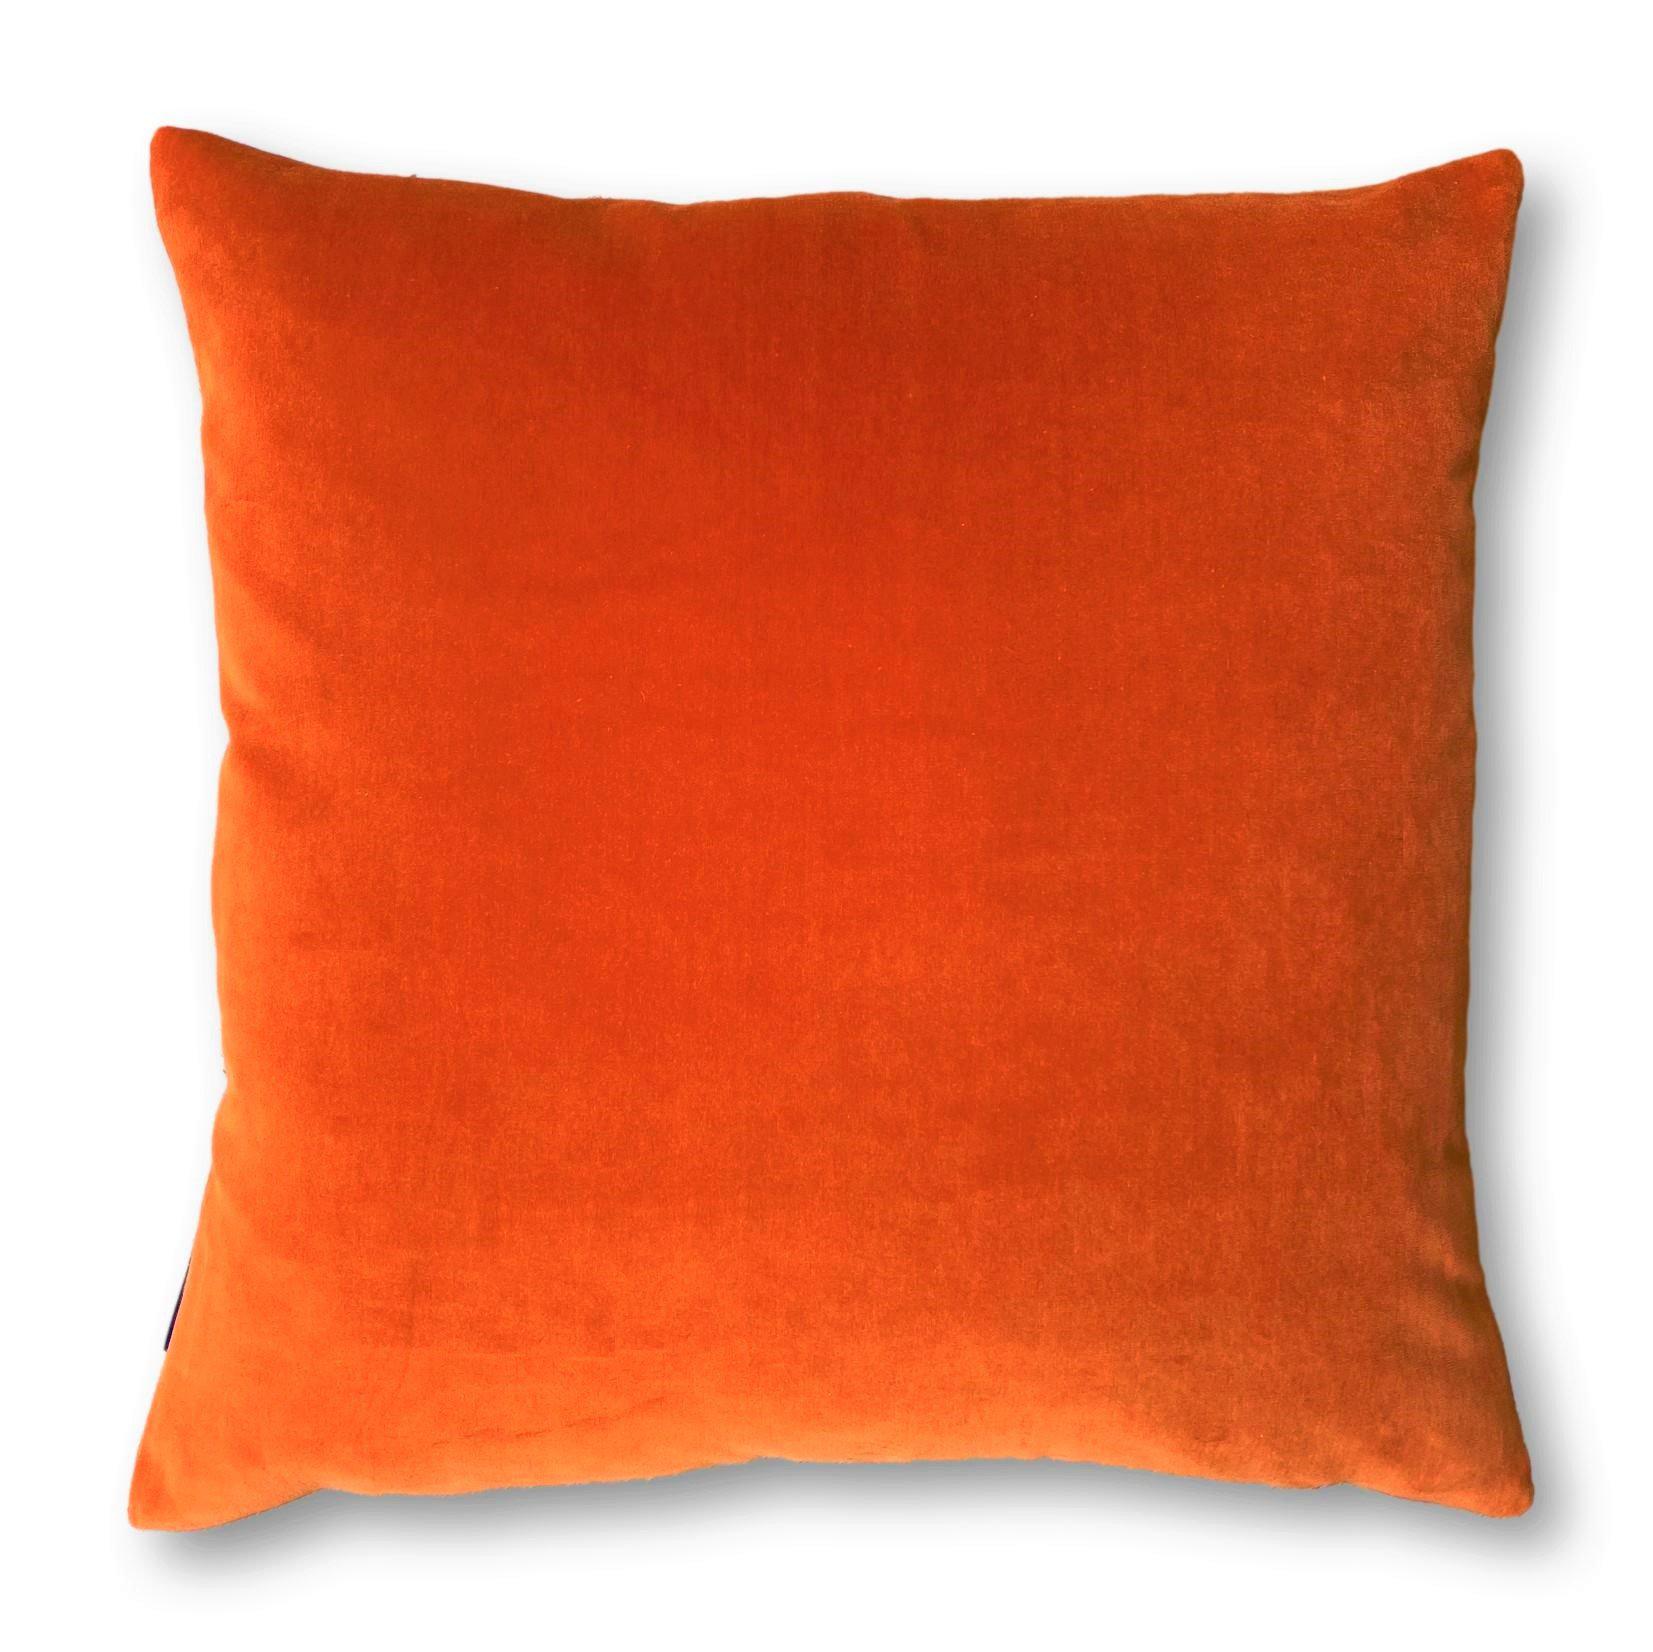 teal and orange cushions